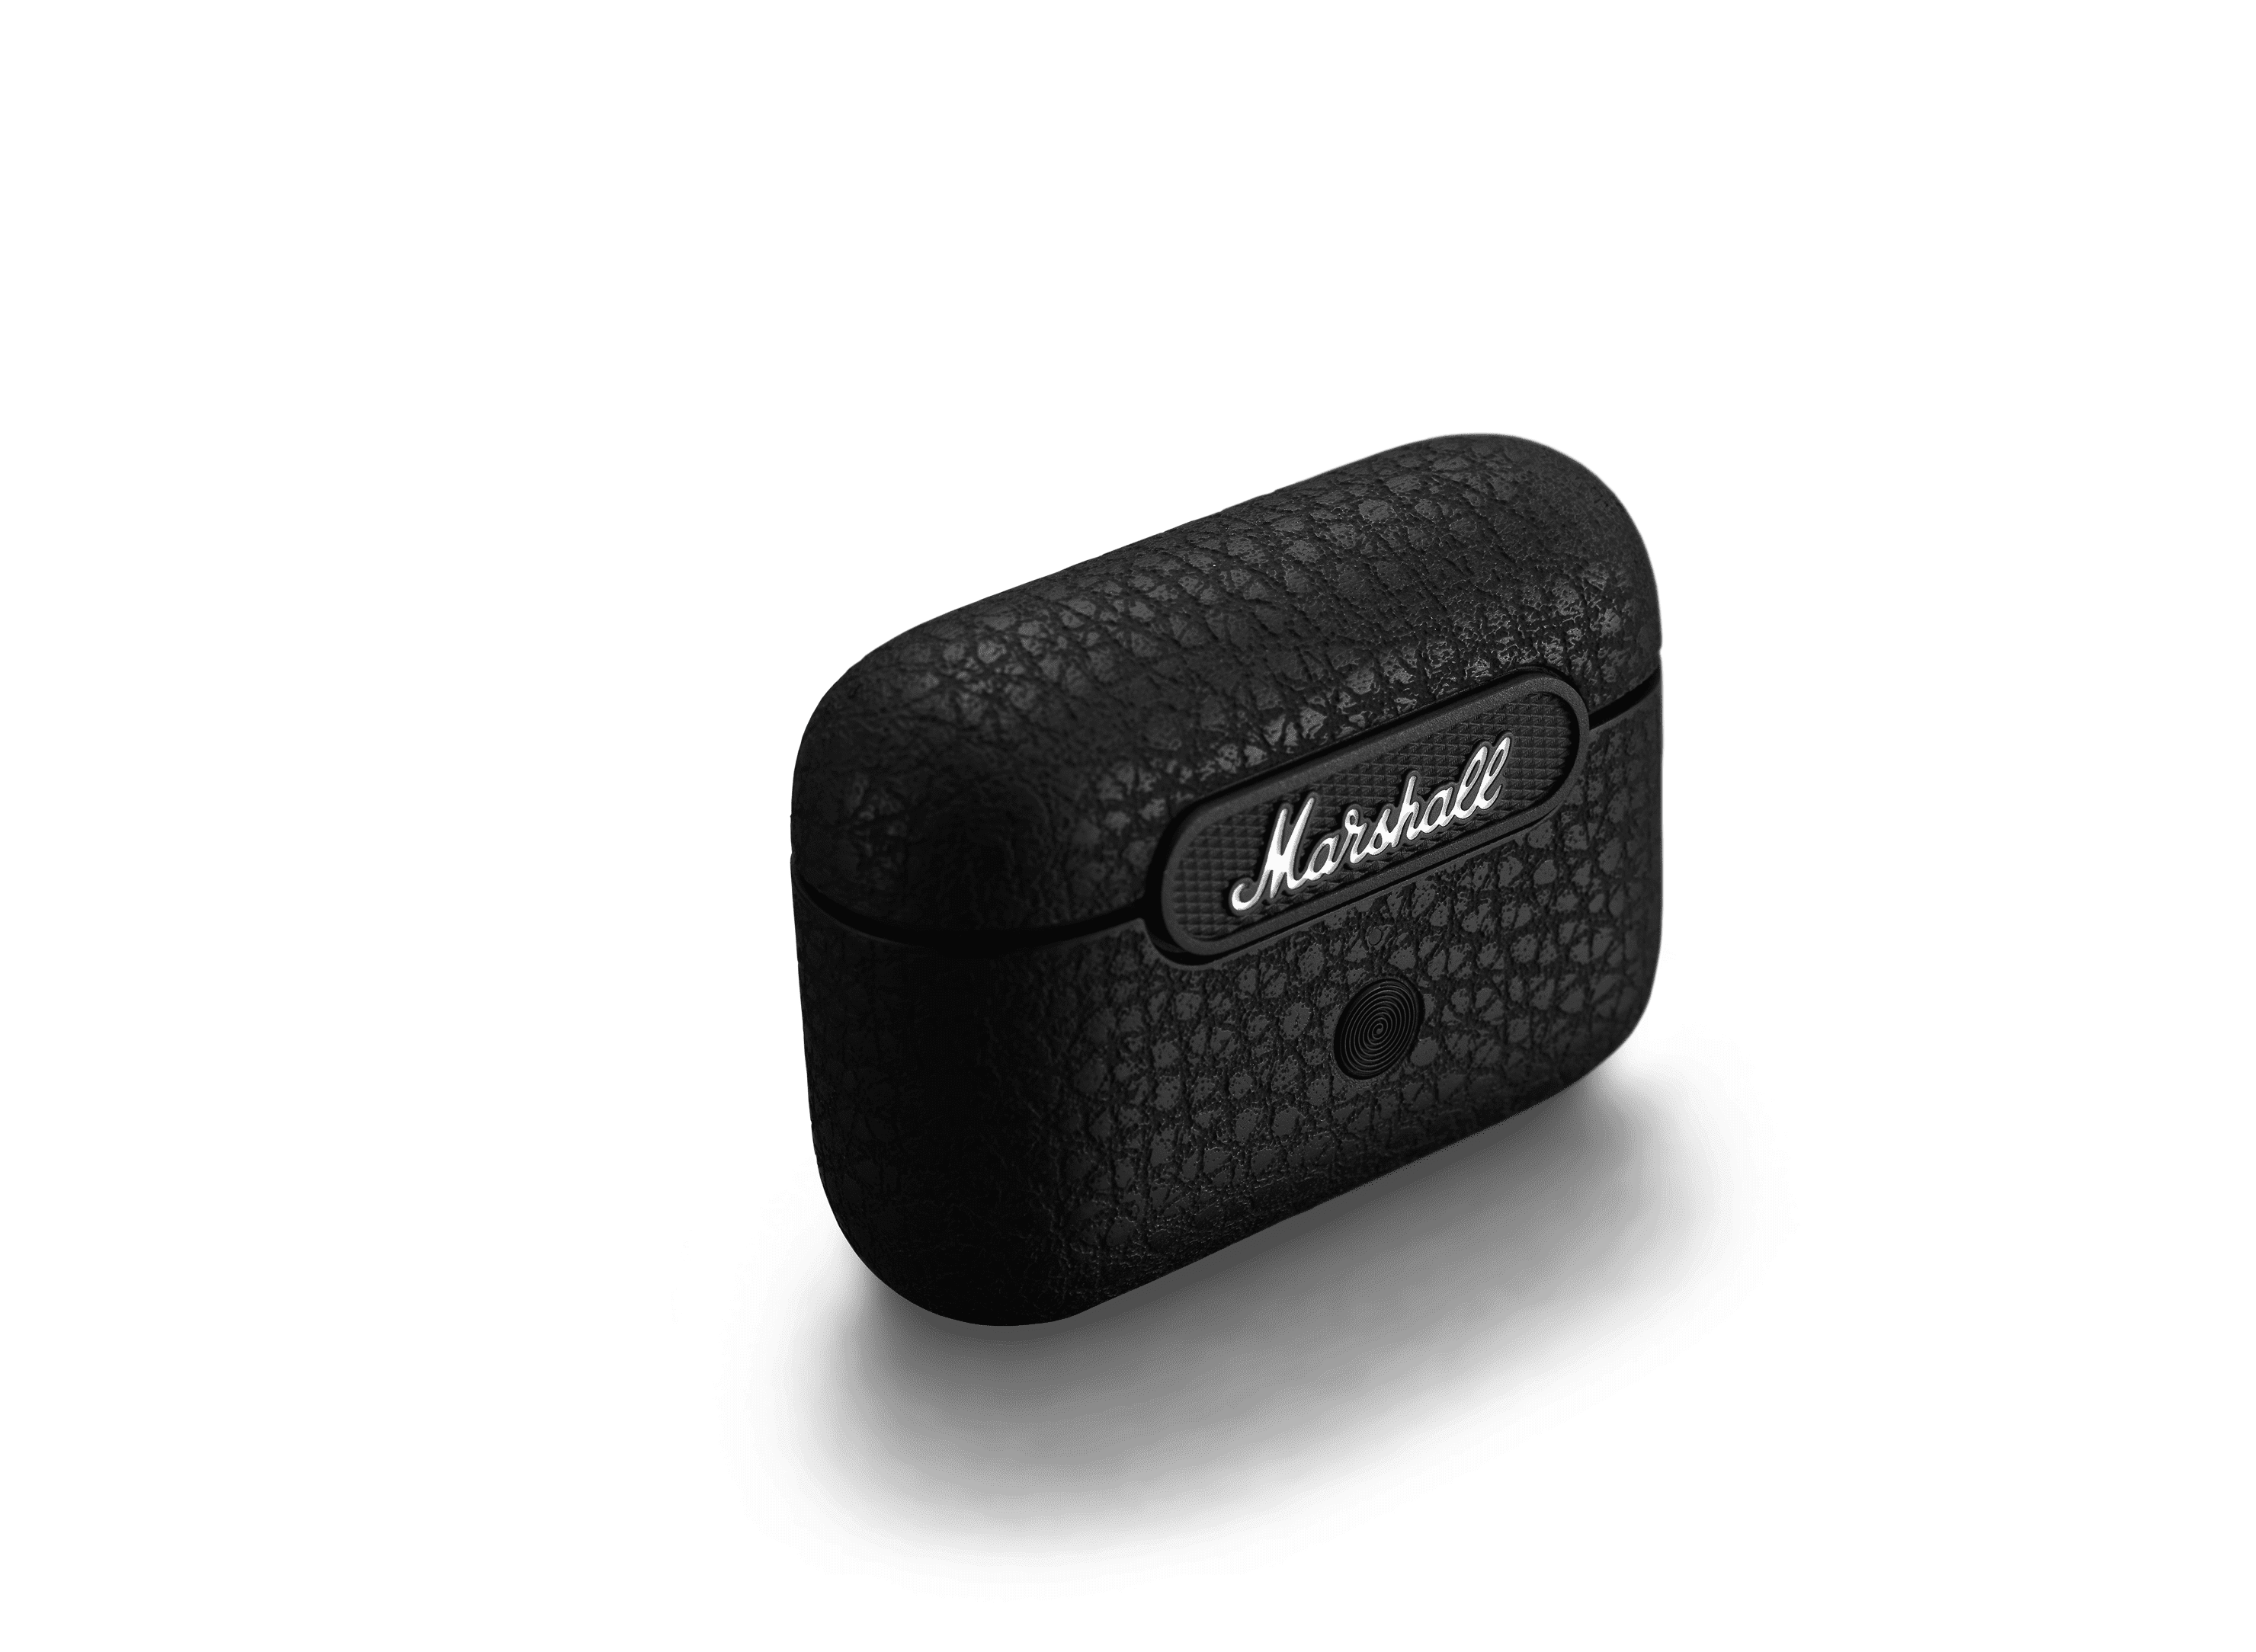 Marshall Marhsall Motif A.N.C. Truewireless Headphone Black 1005964 - Best  Buy